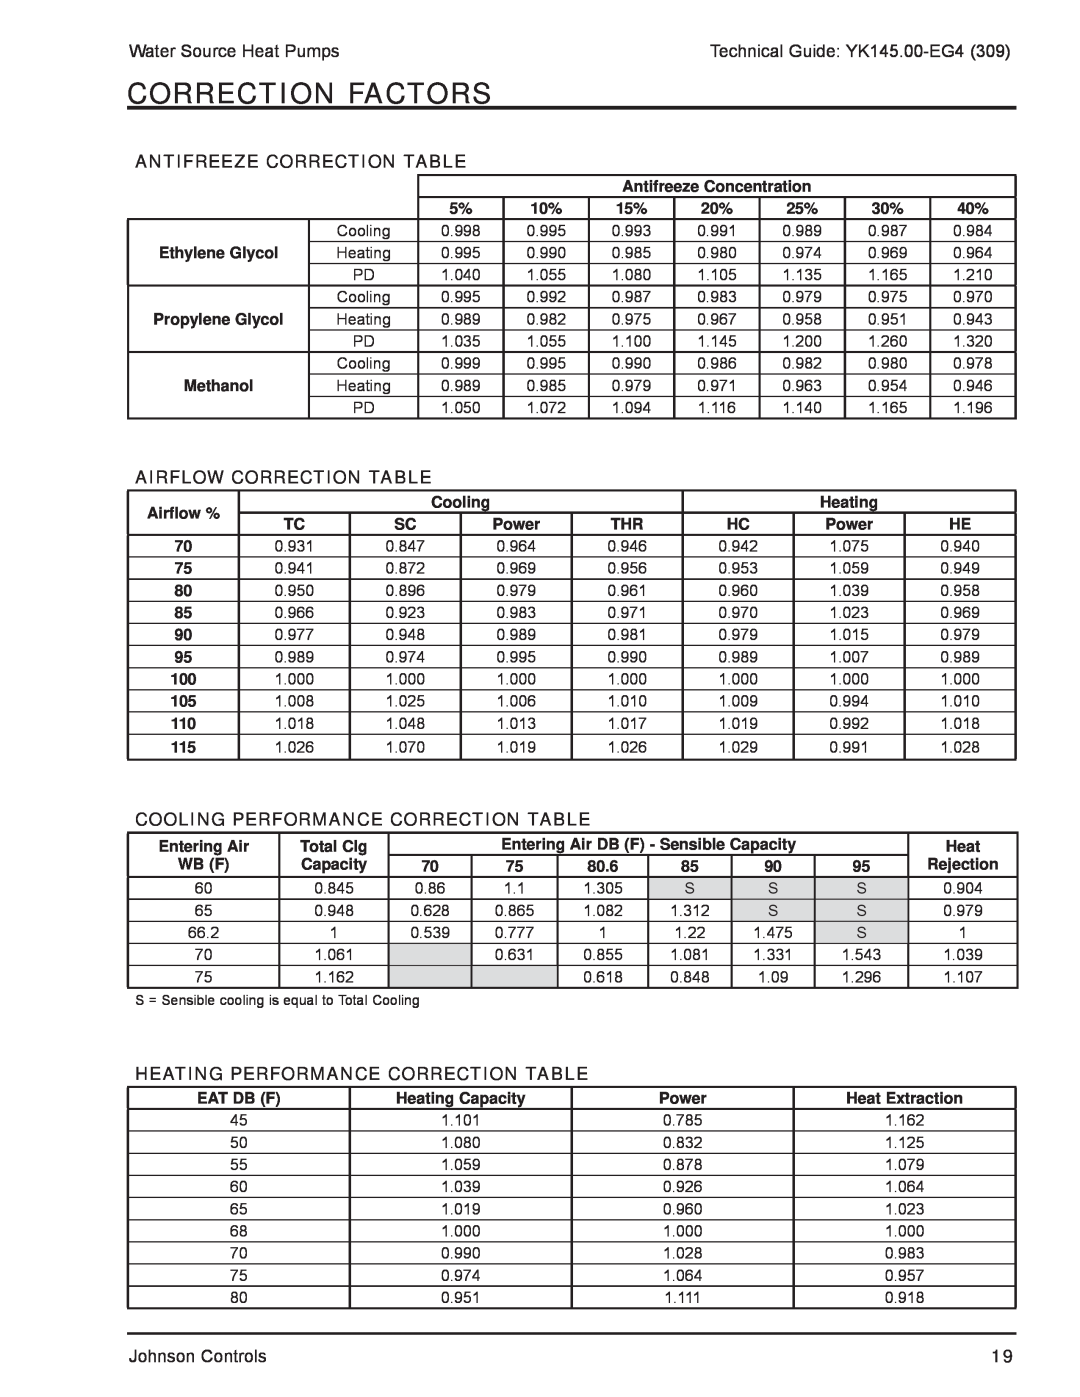 York YK145.00-EG4 manual Correction Factors, Antifreeze Correction Table, Airflow Correction Table 